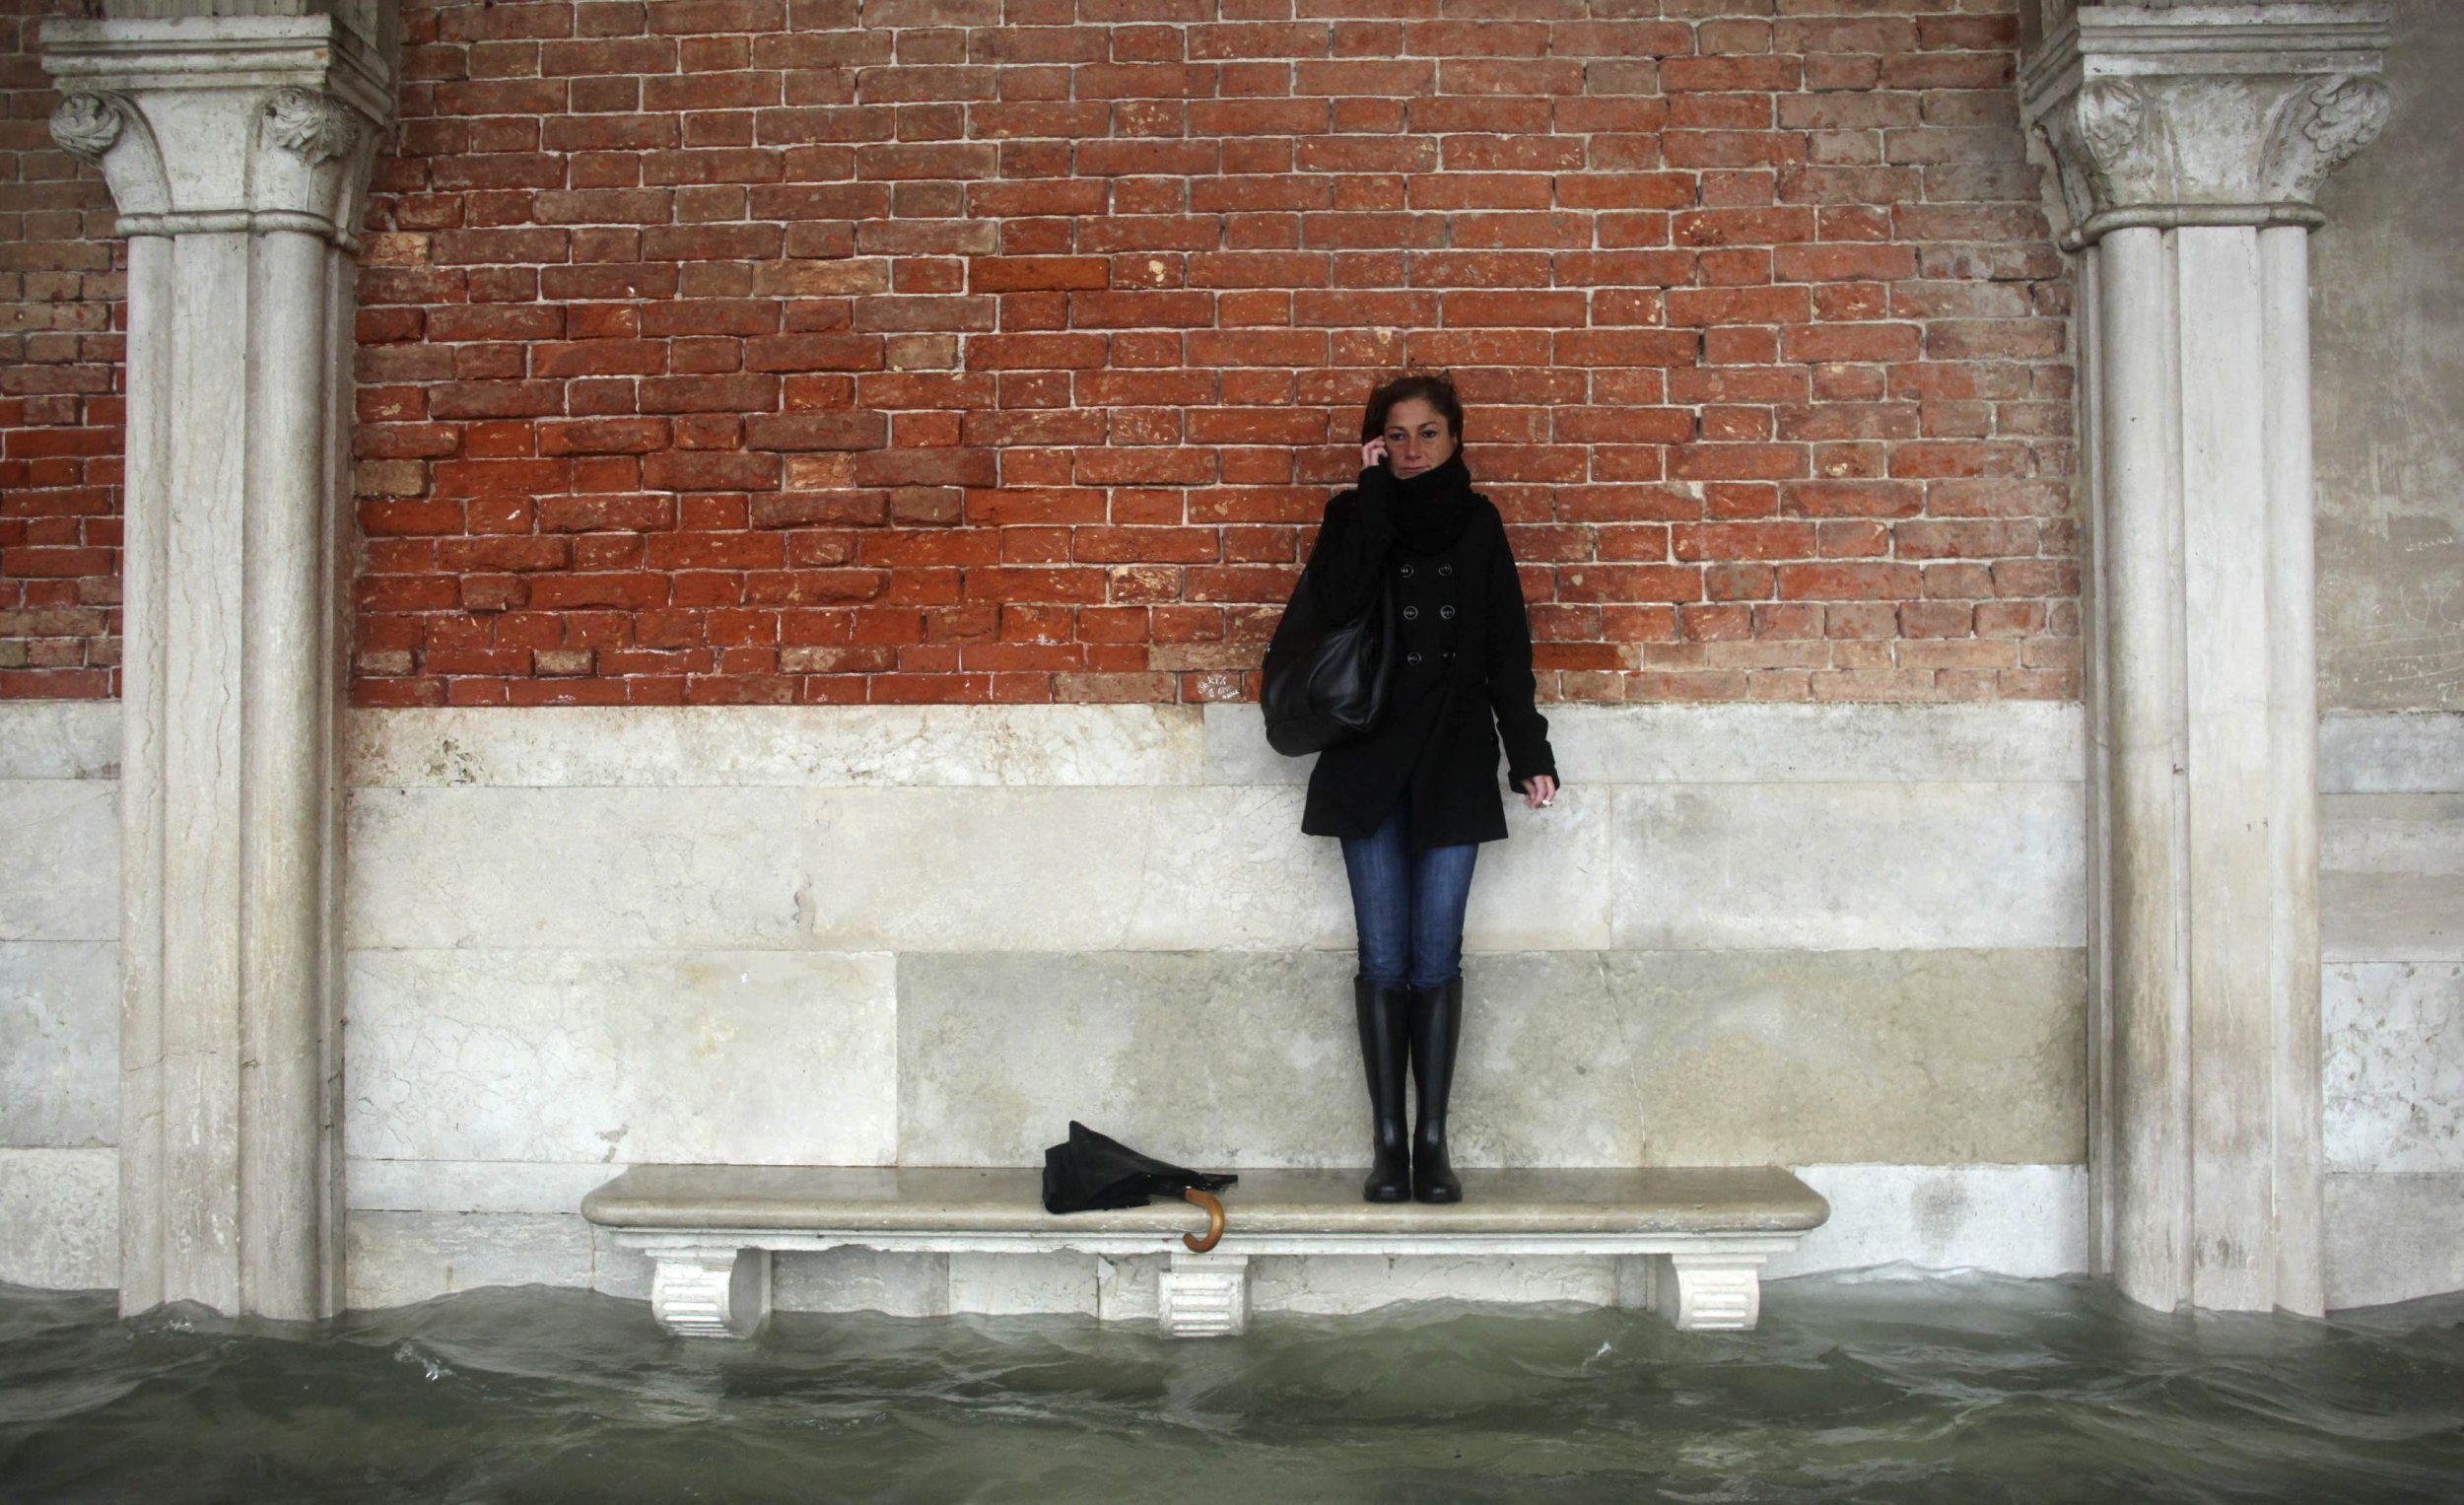 Venice Flooding 2012